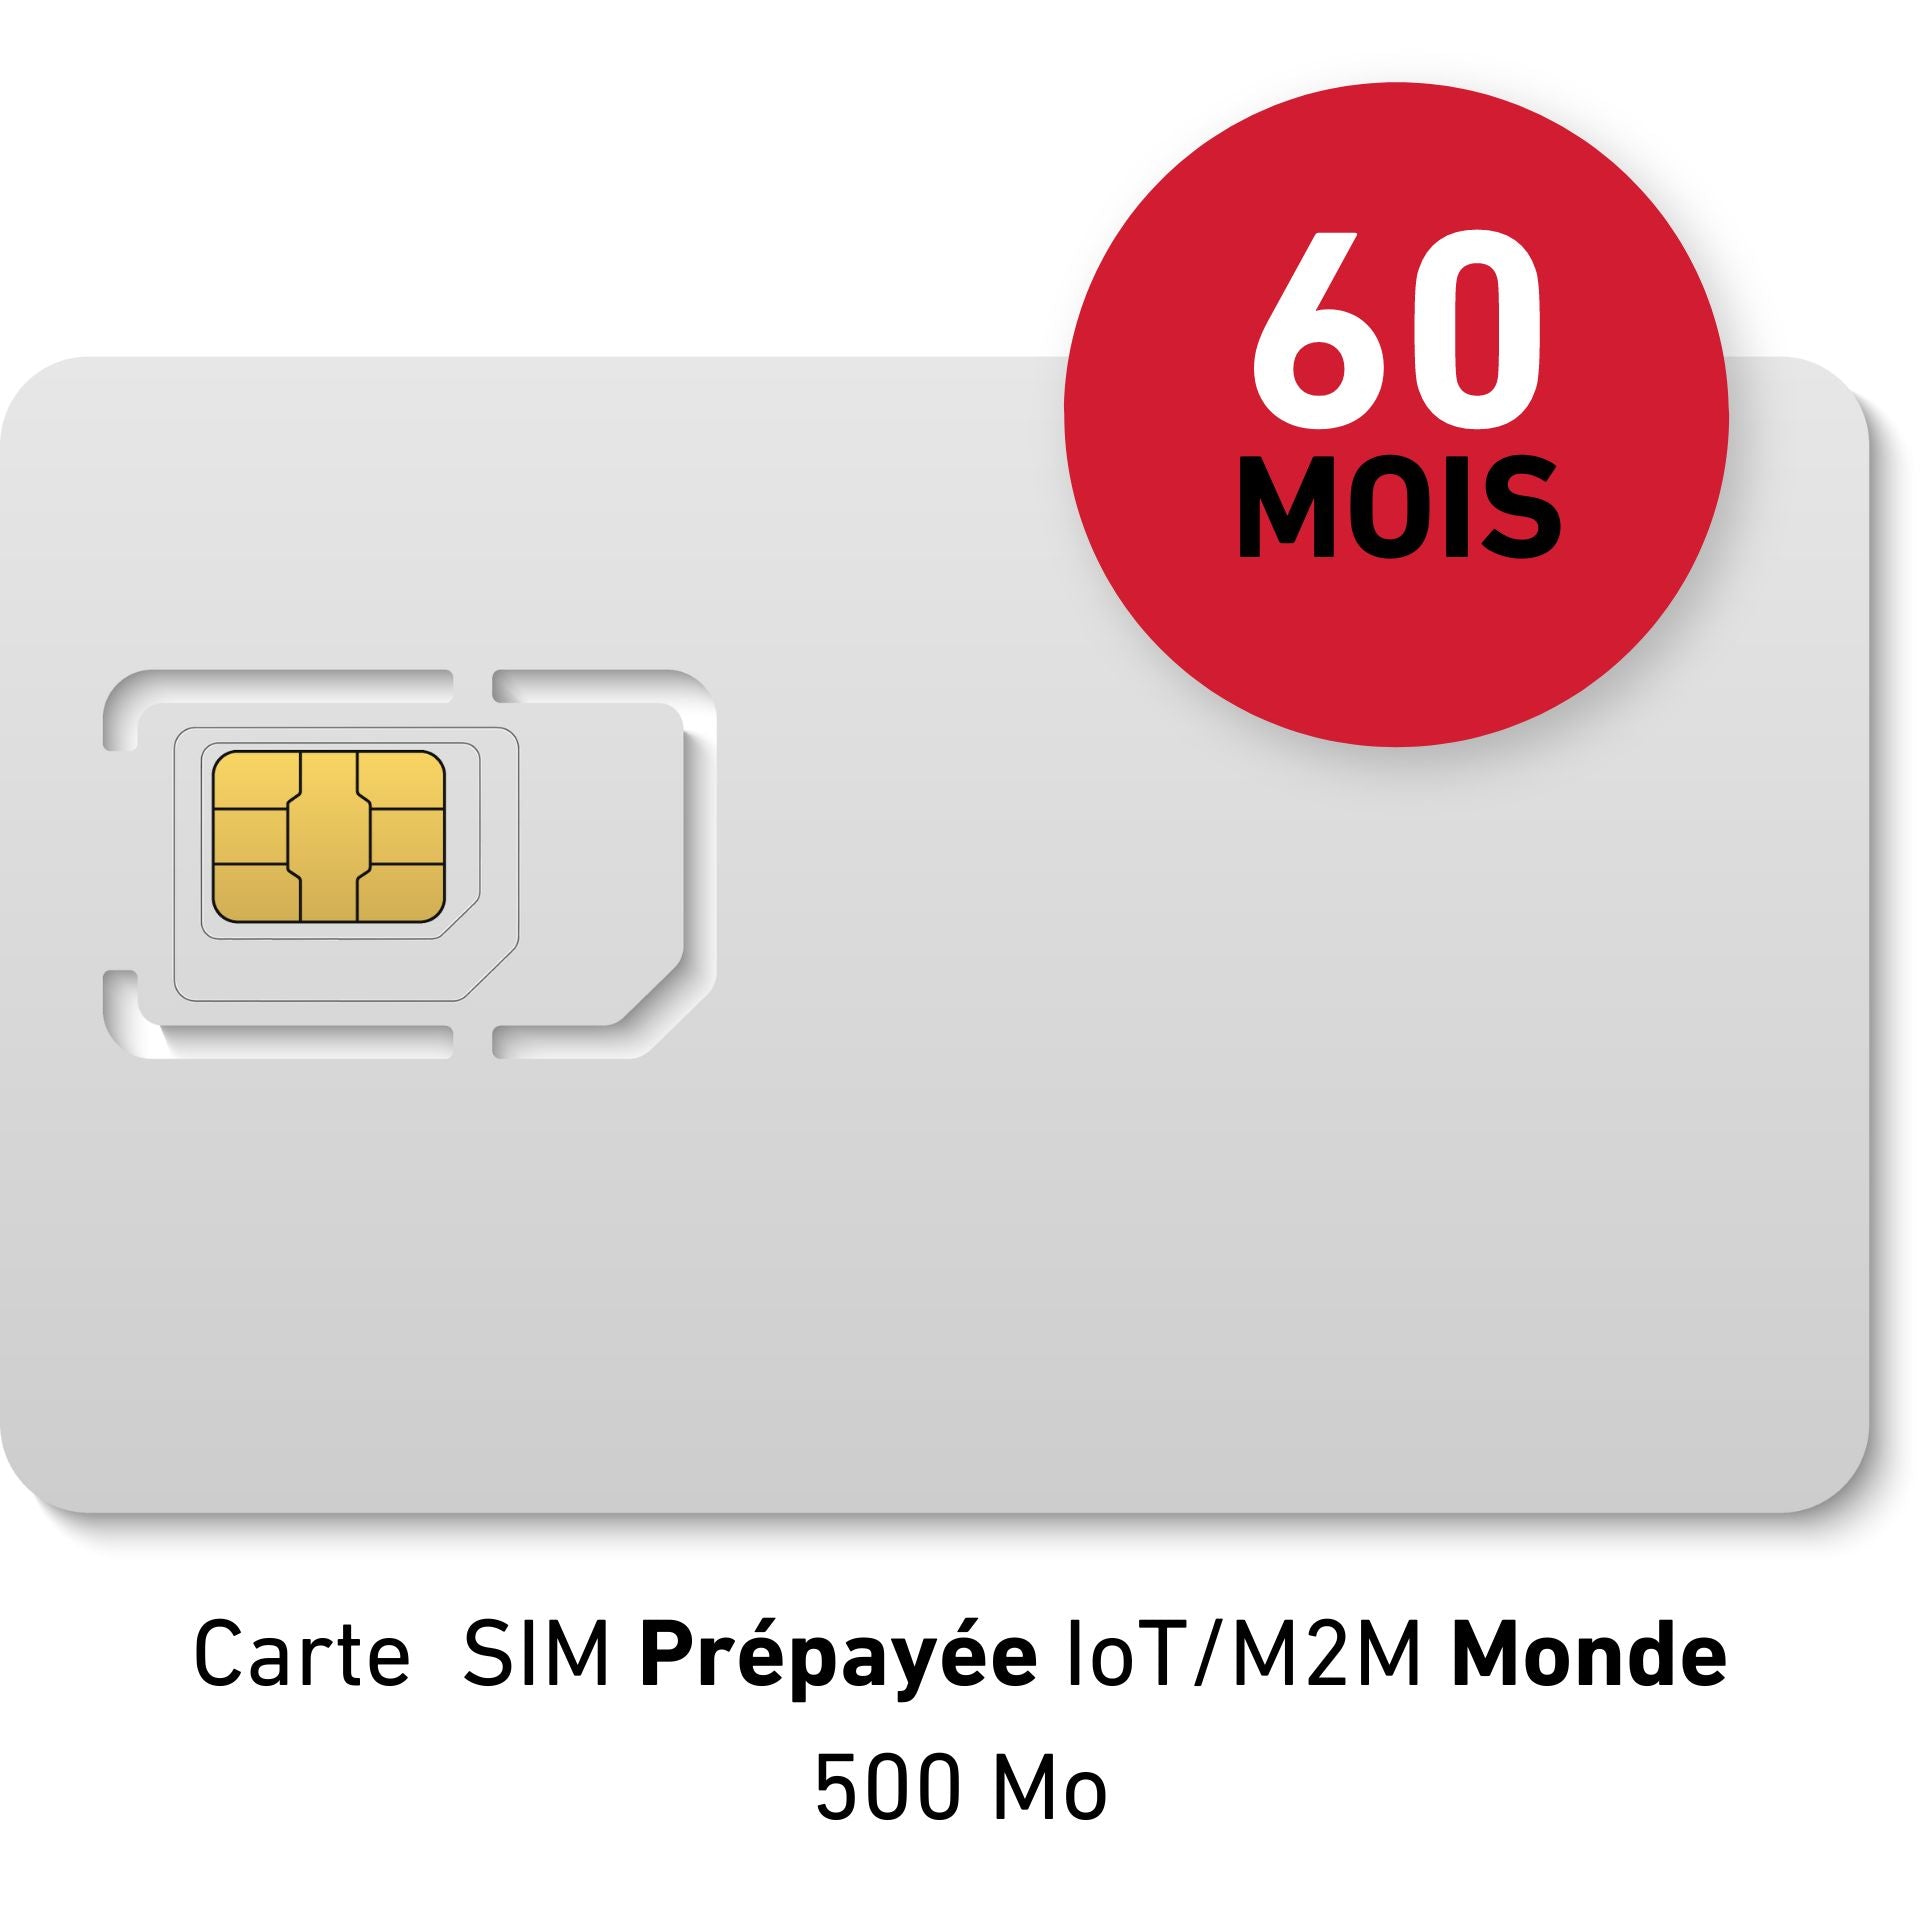 Prepaid SIM Card IoT/M2M World - 50 € HT - 500Mb data - Validity 60 MONTHS